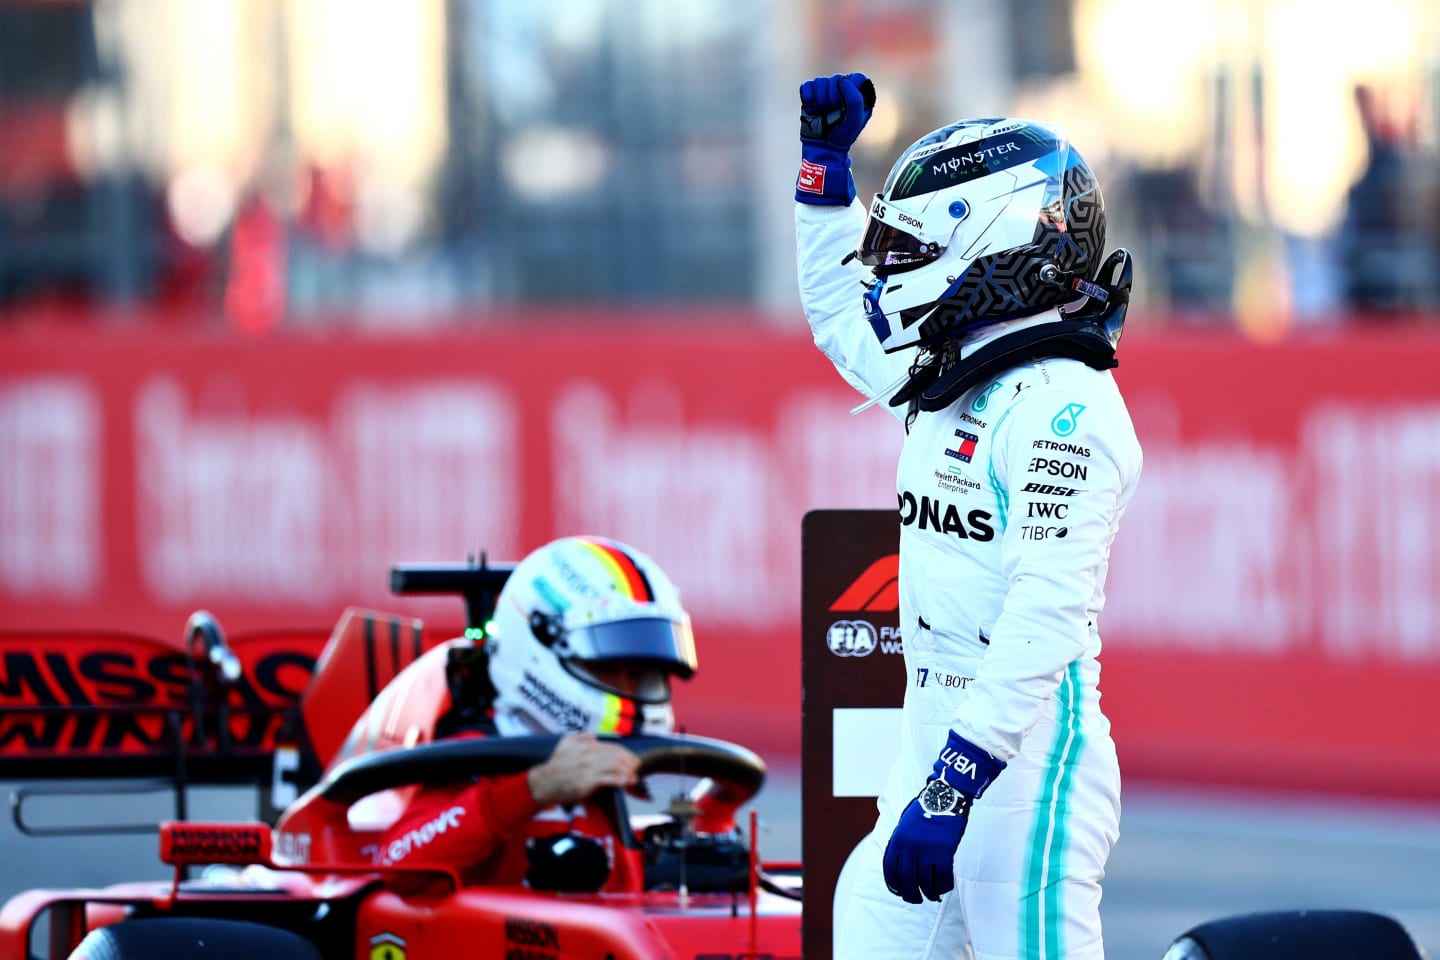 AUSTIN, TEXAS - NOVEMBER 02: Pole position qualifier Valtteri Bottas of Finland and Mercedes GP